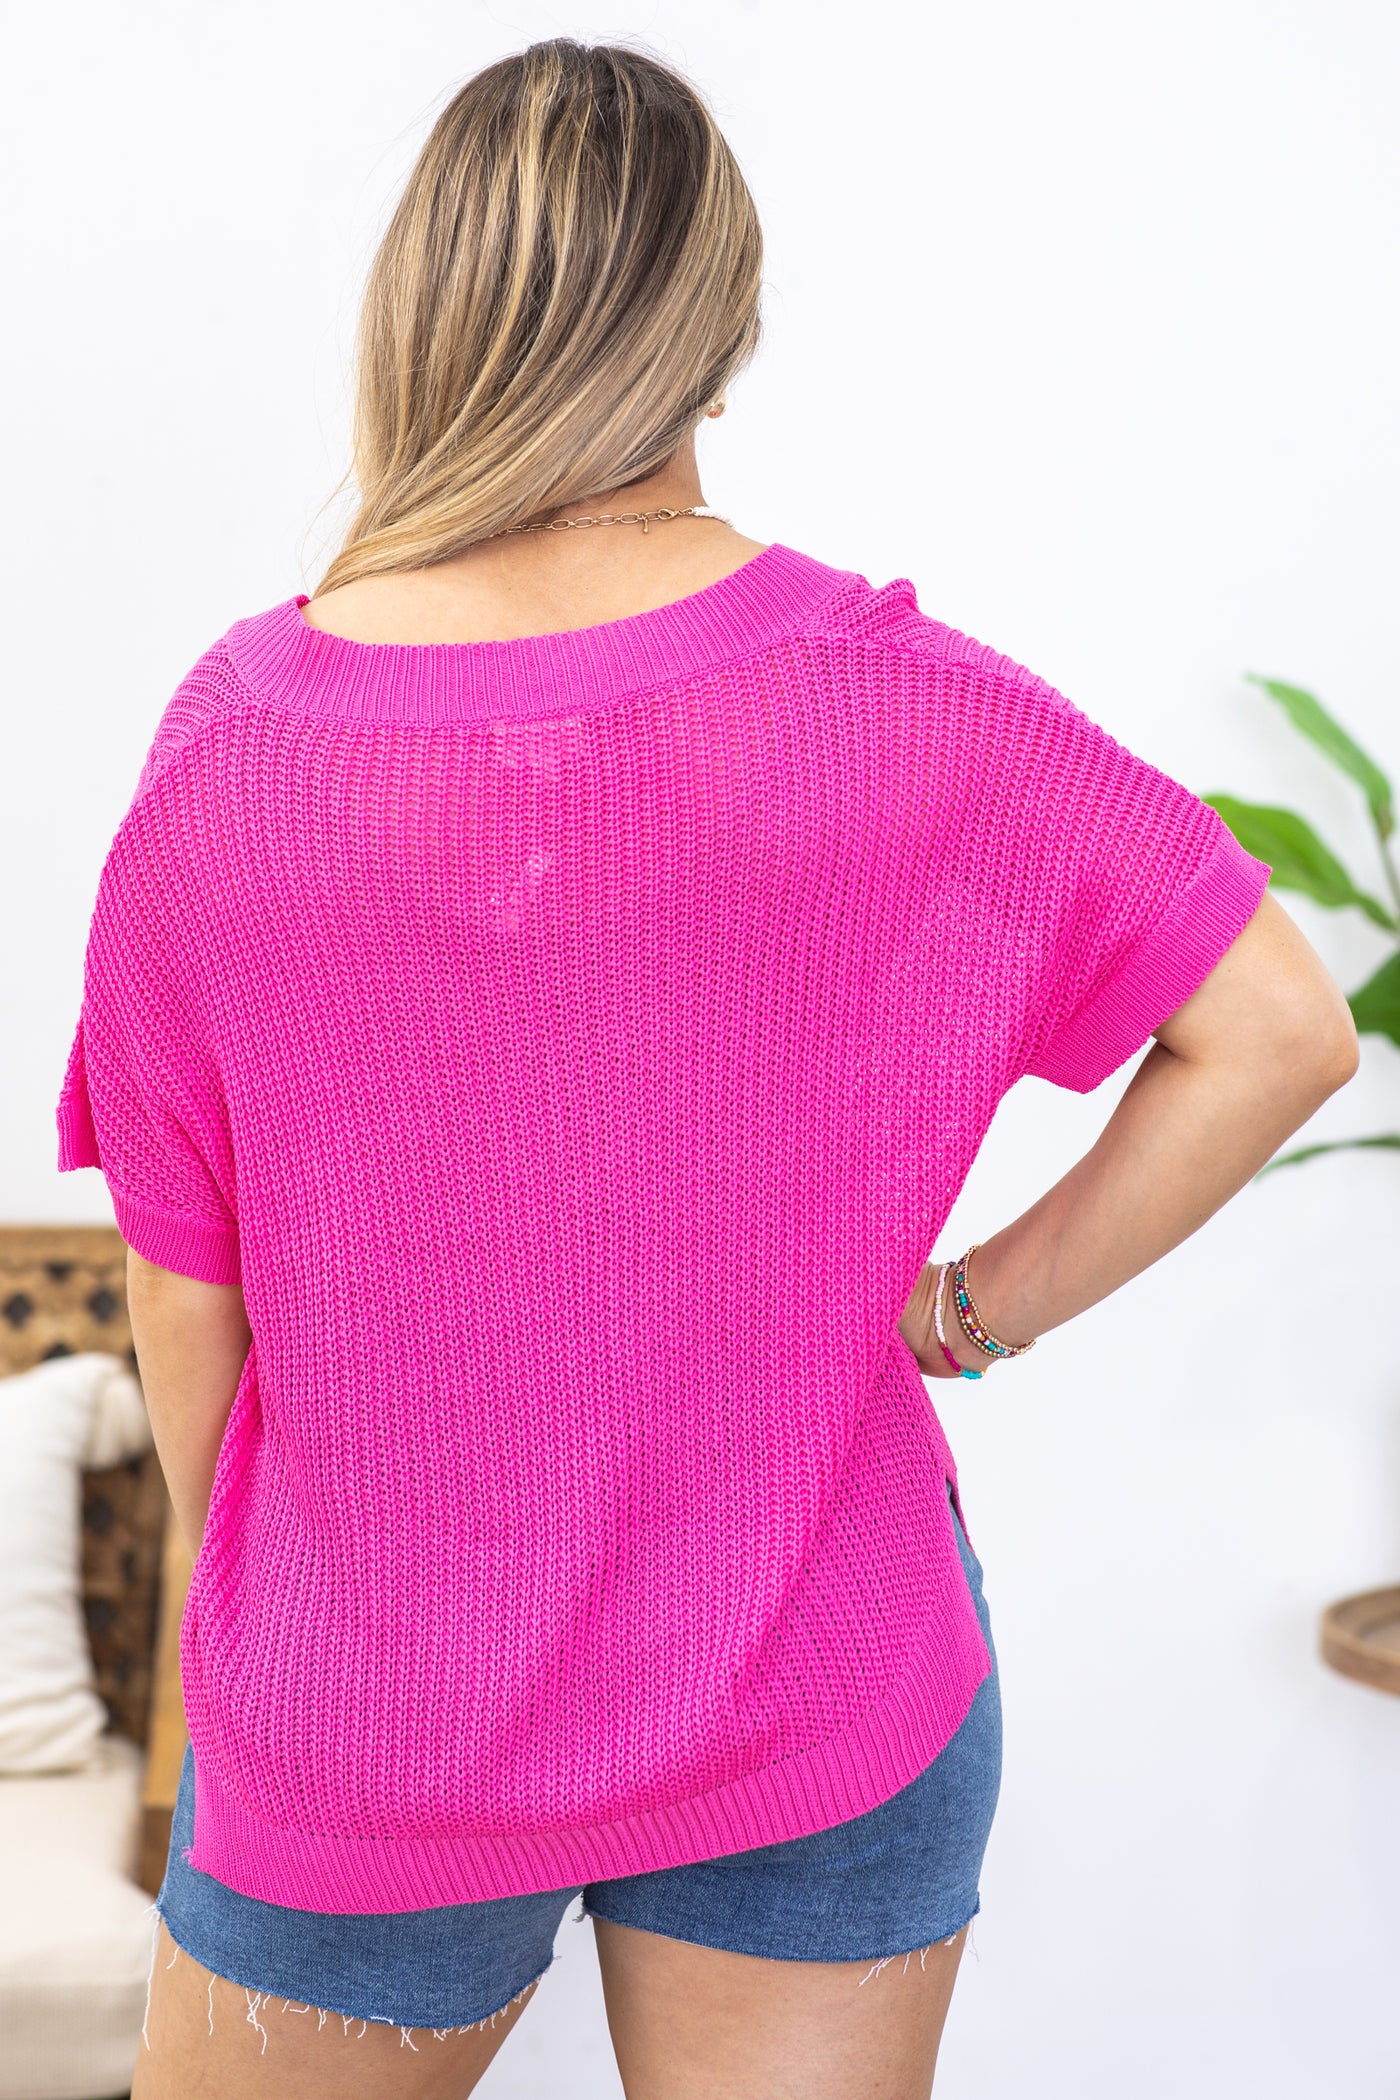 Hot Pink Lightweight V-Neck Sweater Top